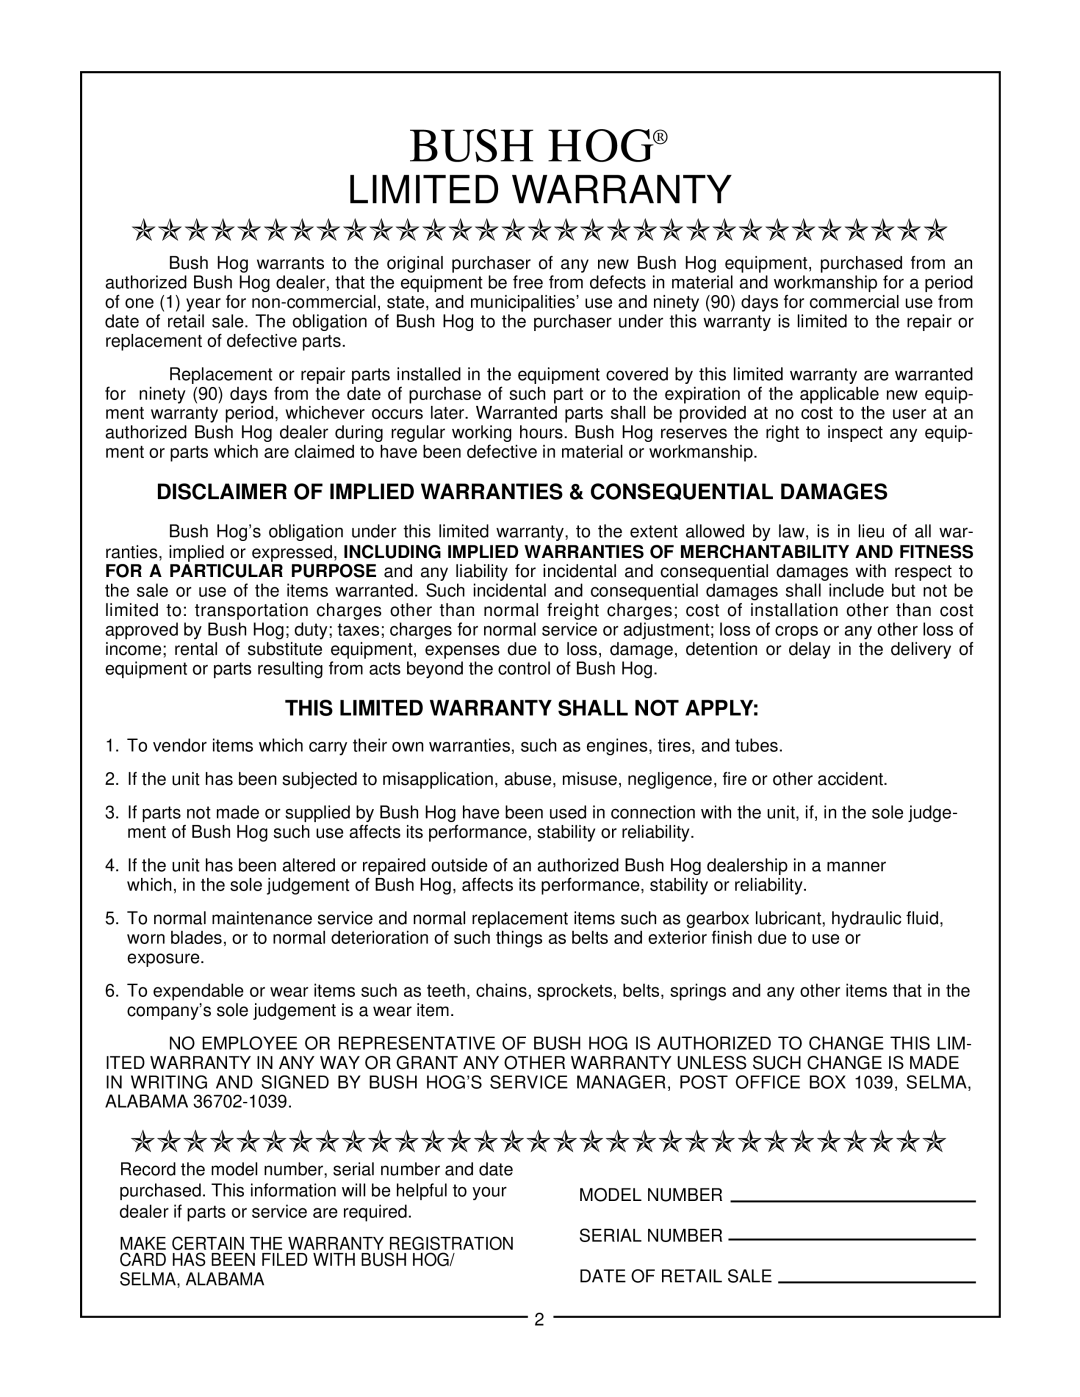 Bush Hog 305, 306 manual This Limited Warranty Shall Not Apply, Bush Hog 